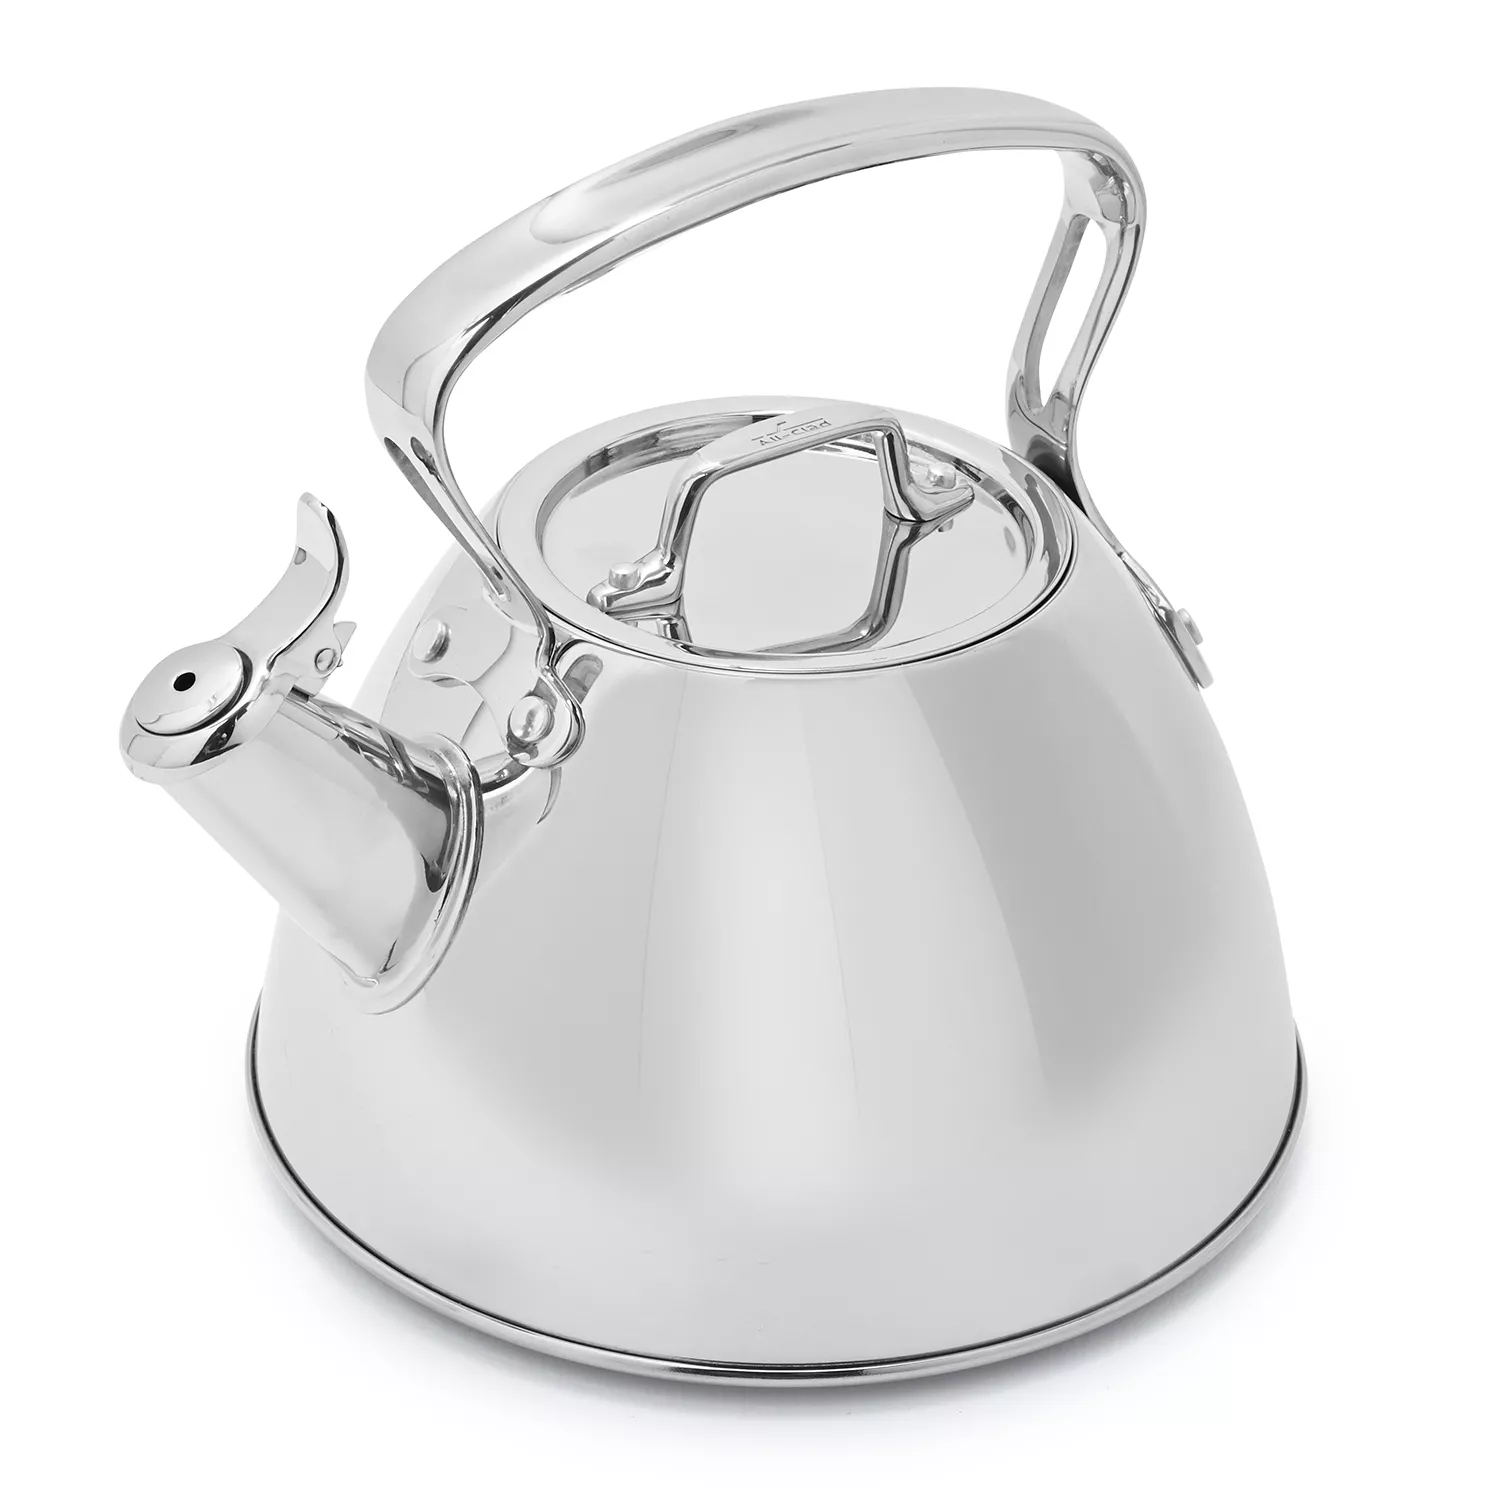 All-Clad Stainless-Steel Tea Kettle